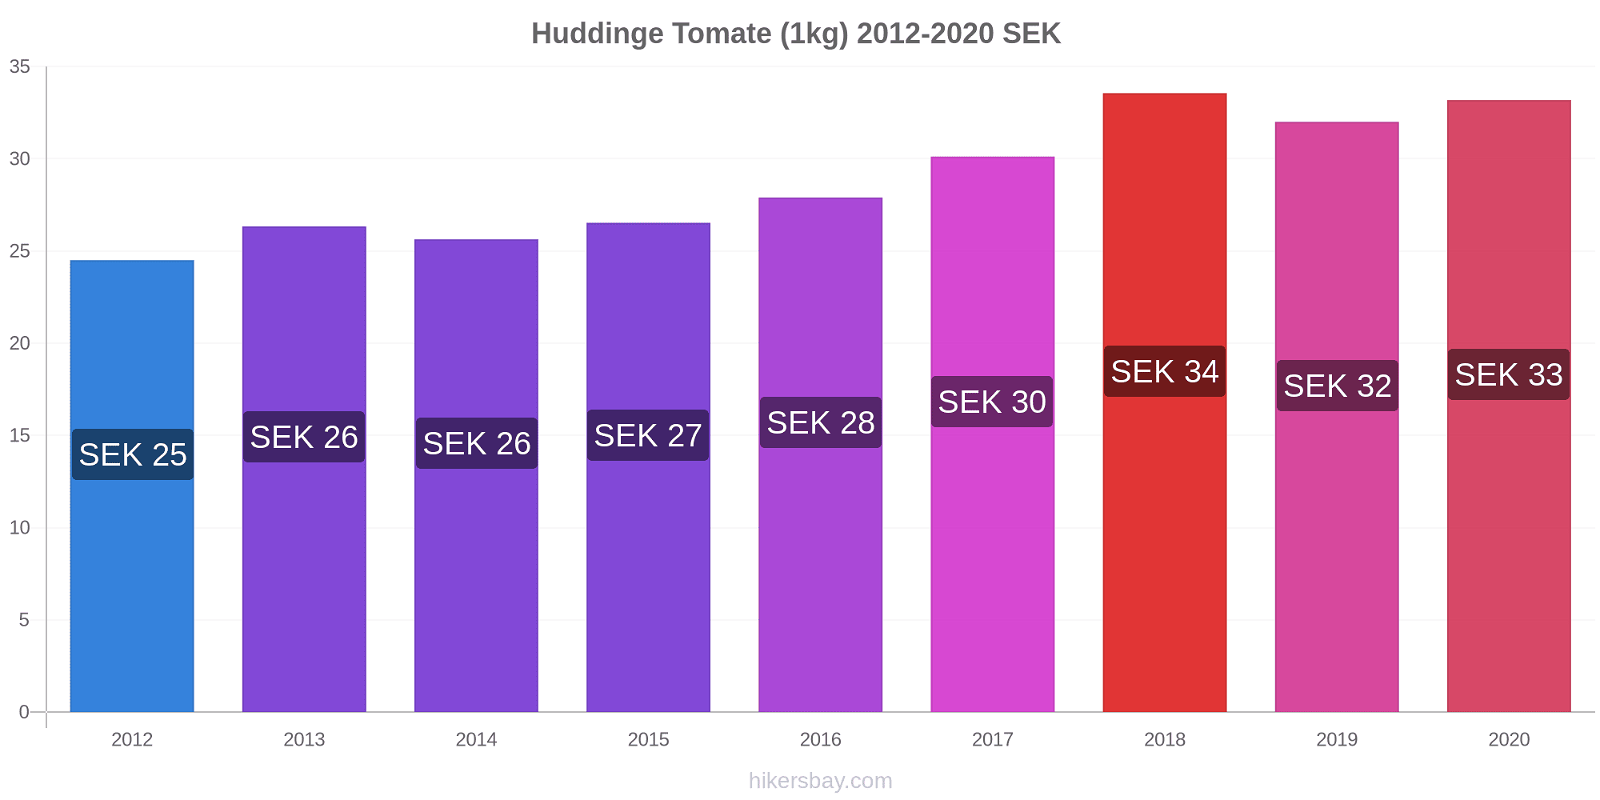 Huddinge cambios de precios Tomate (1kg) hikersbay.com